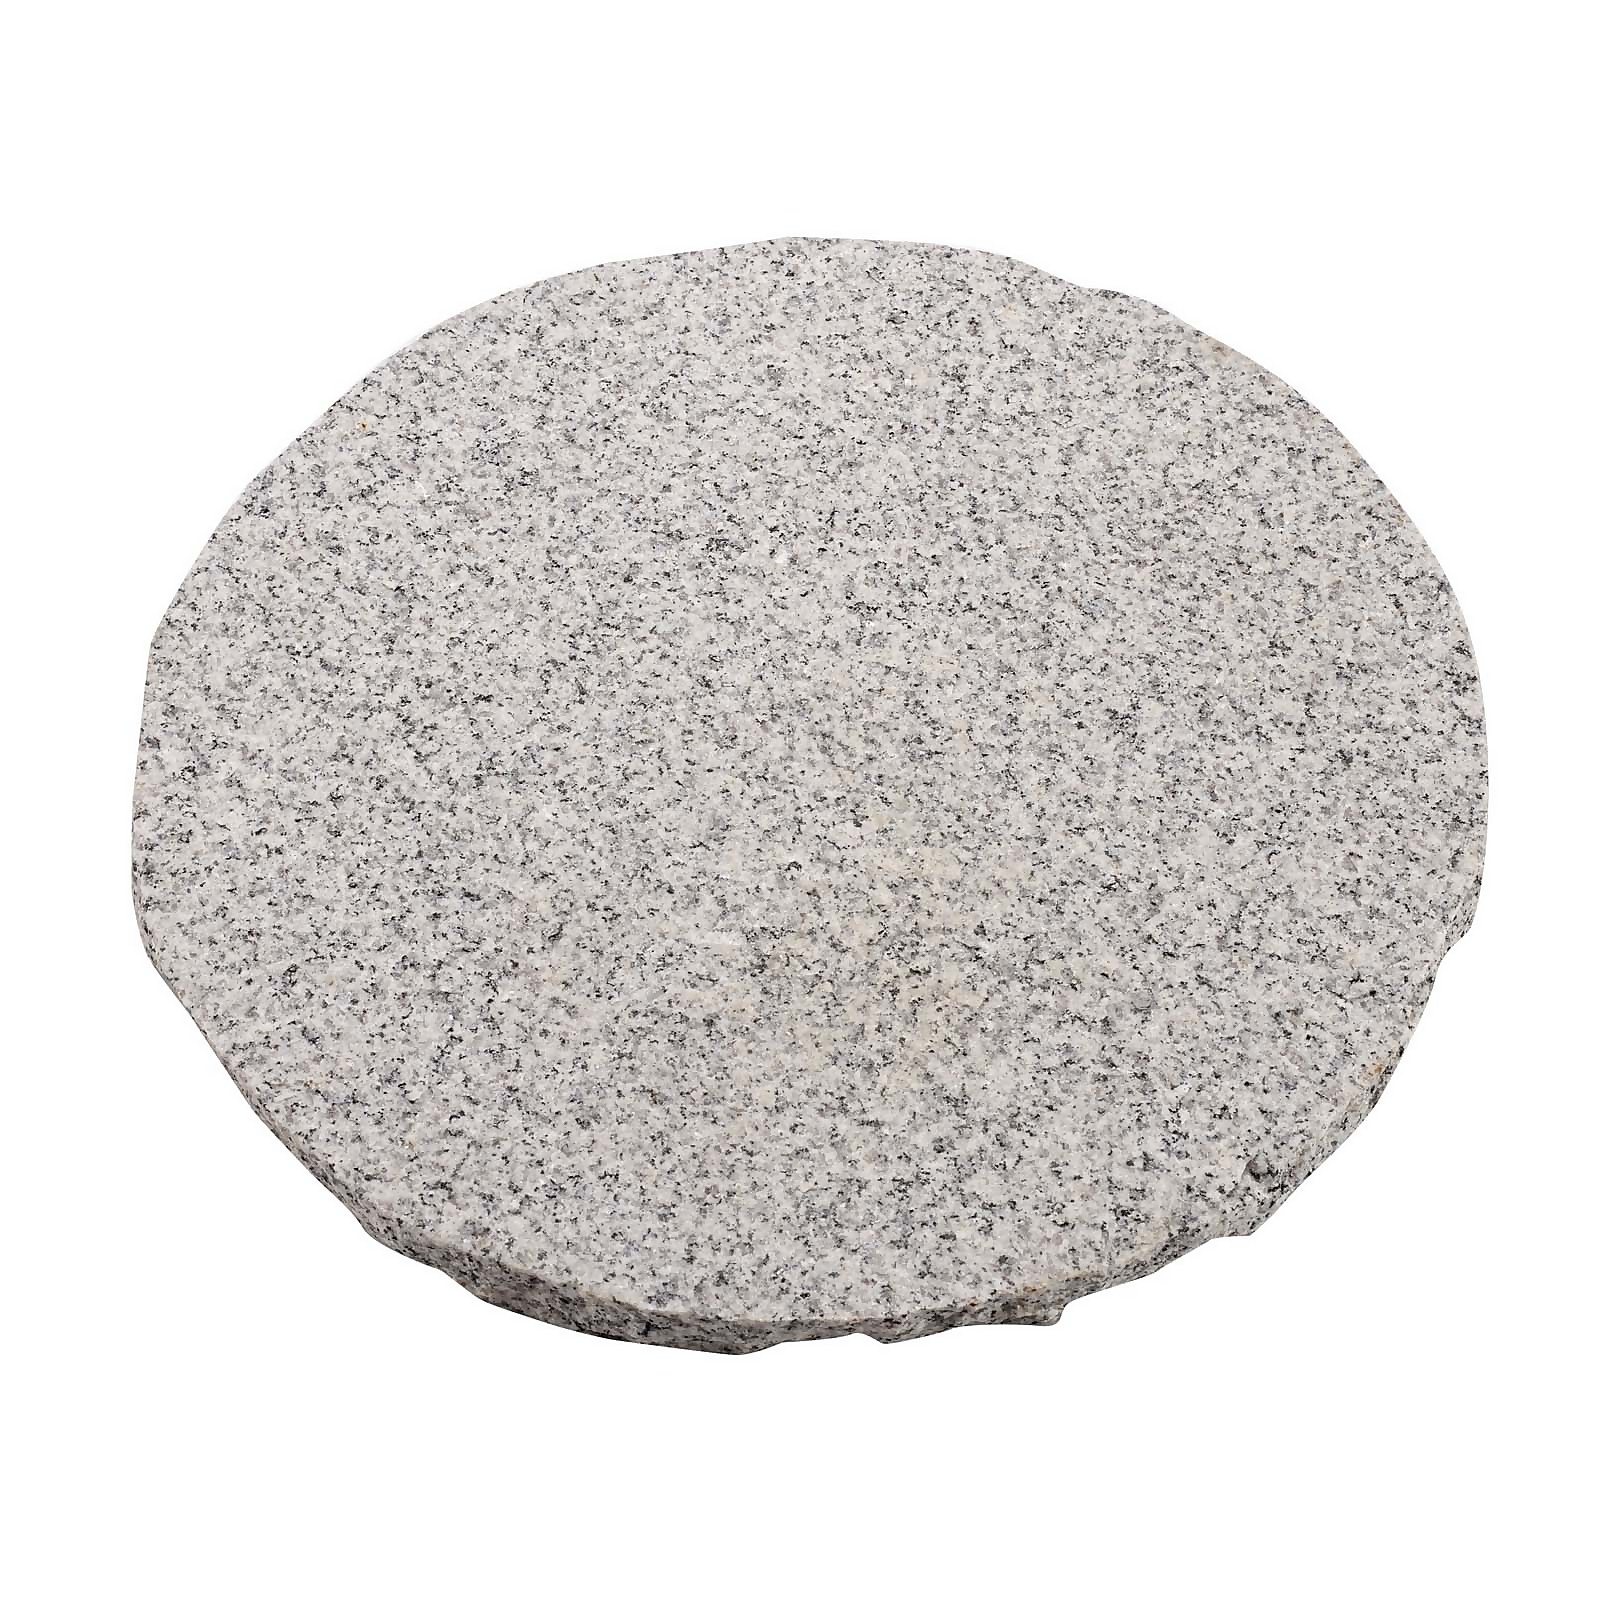 Photo of Stylish Stone Granite Stepping Stone 300mm - Light Grey